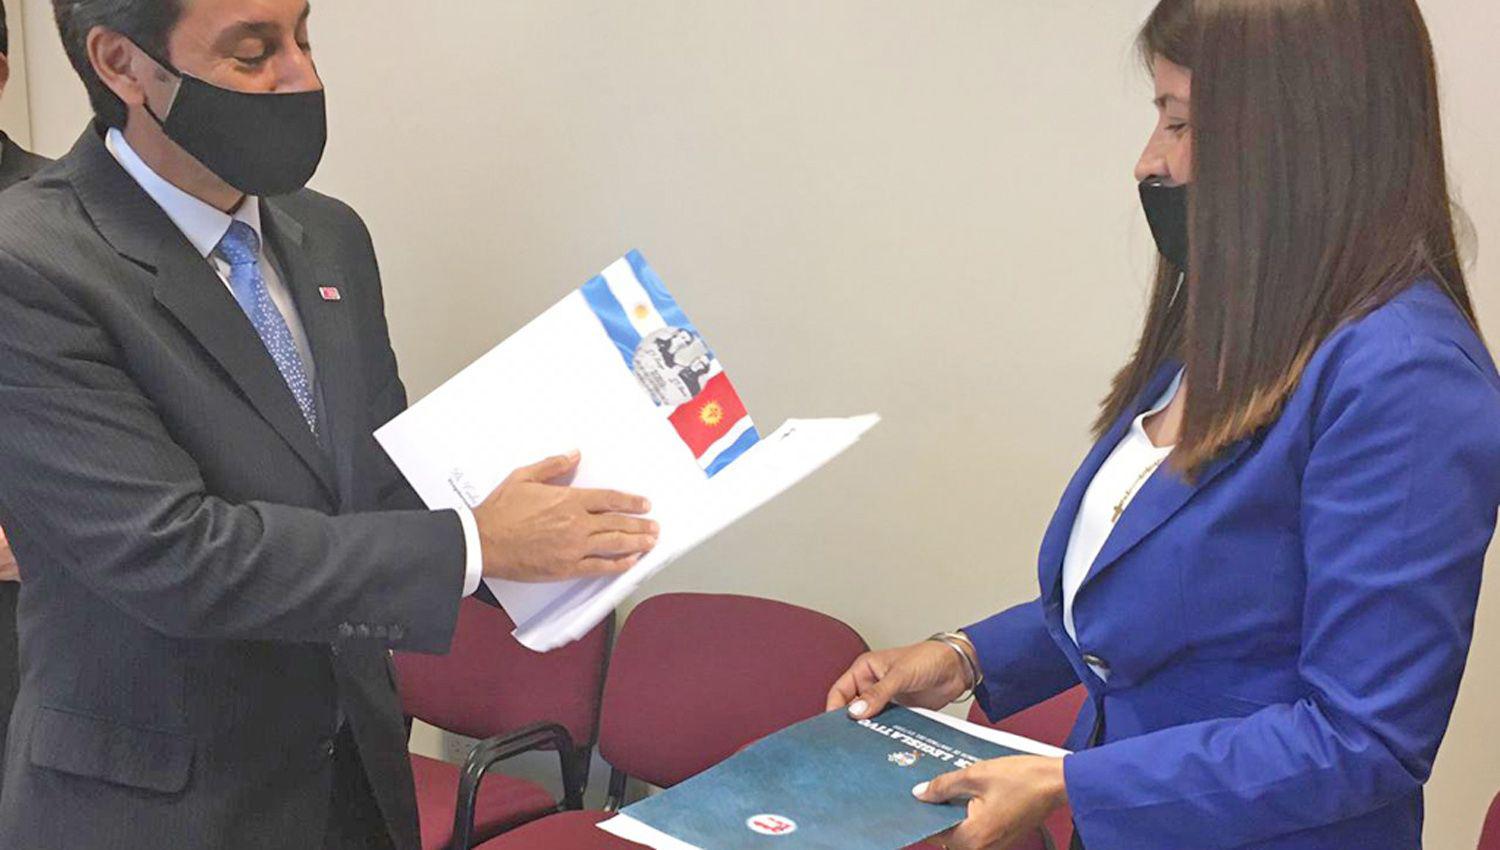 De la firma del convenio realizada ayer participó el vicegobernador
de la provincia Dr Carlos Silva Neder